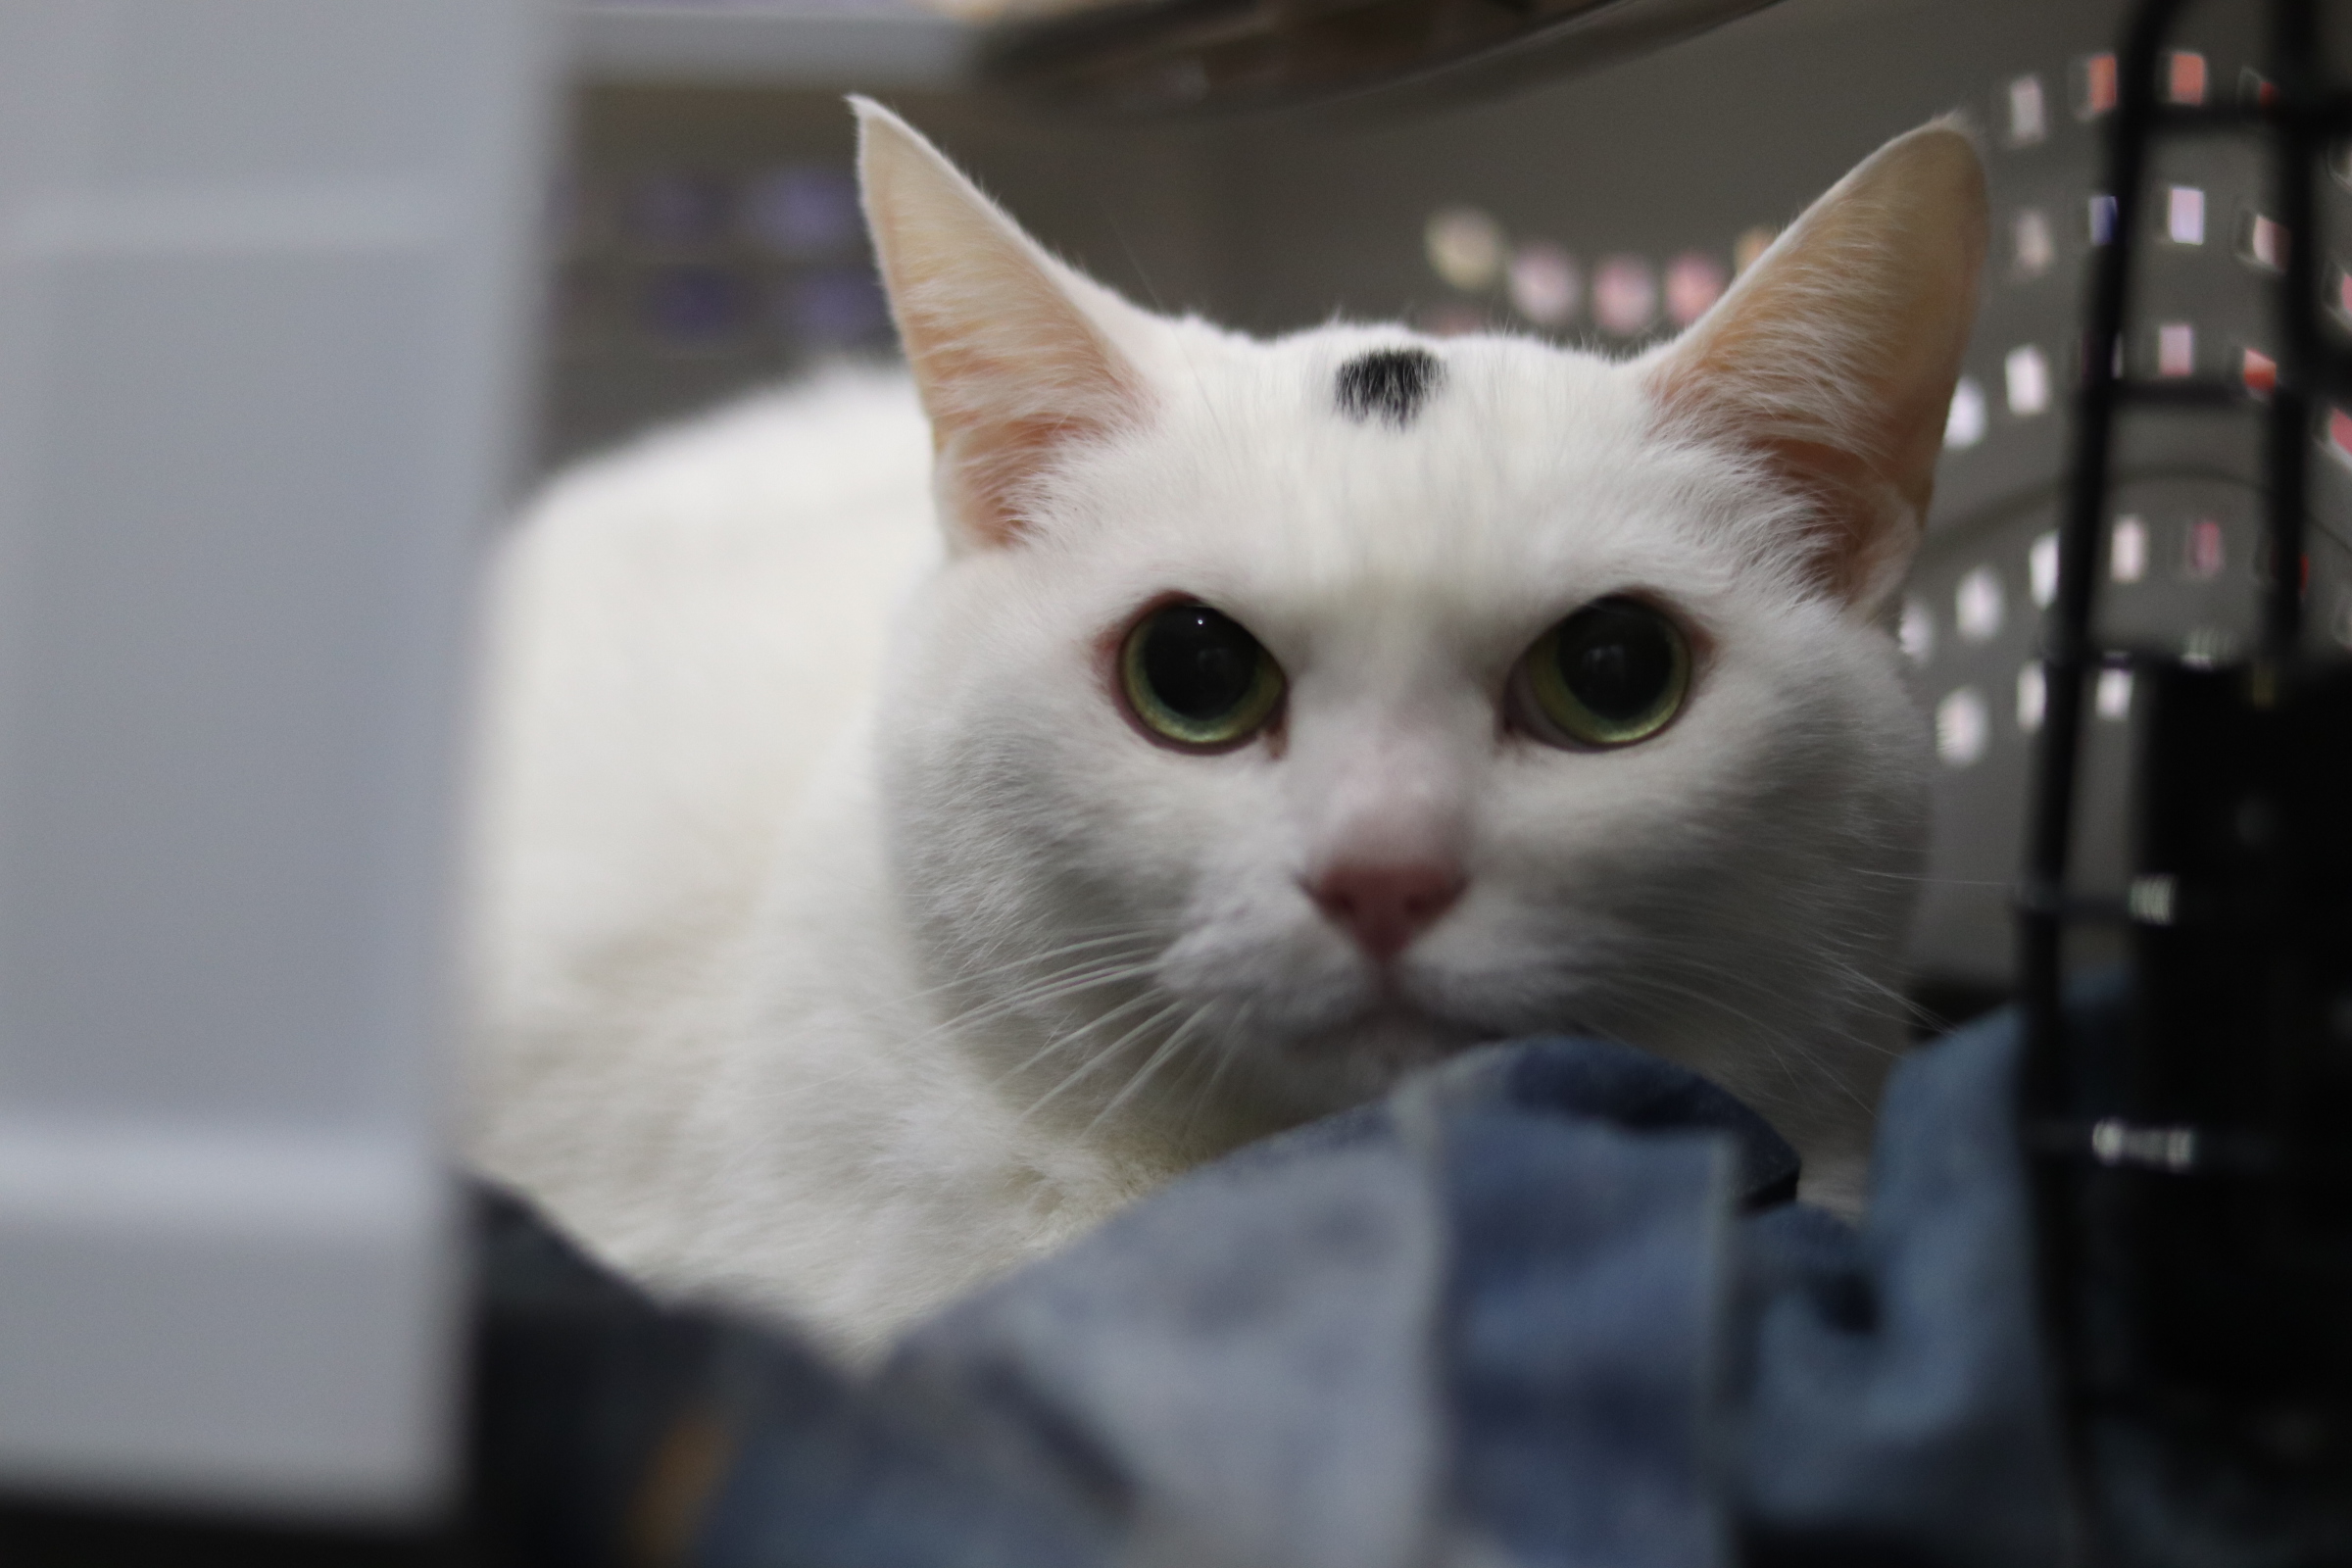 <ul>
<li>猫種：日本猫</li>
<li>名前（性別）：てん(女の子)</li>
<li>年齢：2011年6月頃生まれ</li>
<li>保護経緯：引越しのため飼育困難</li>
</ul>
